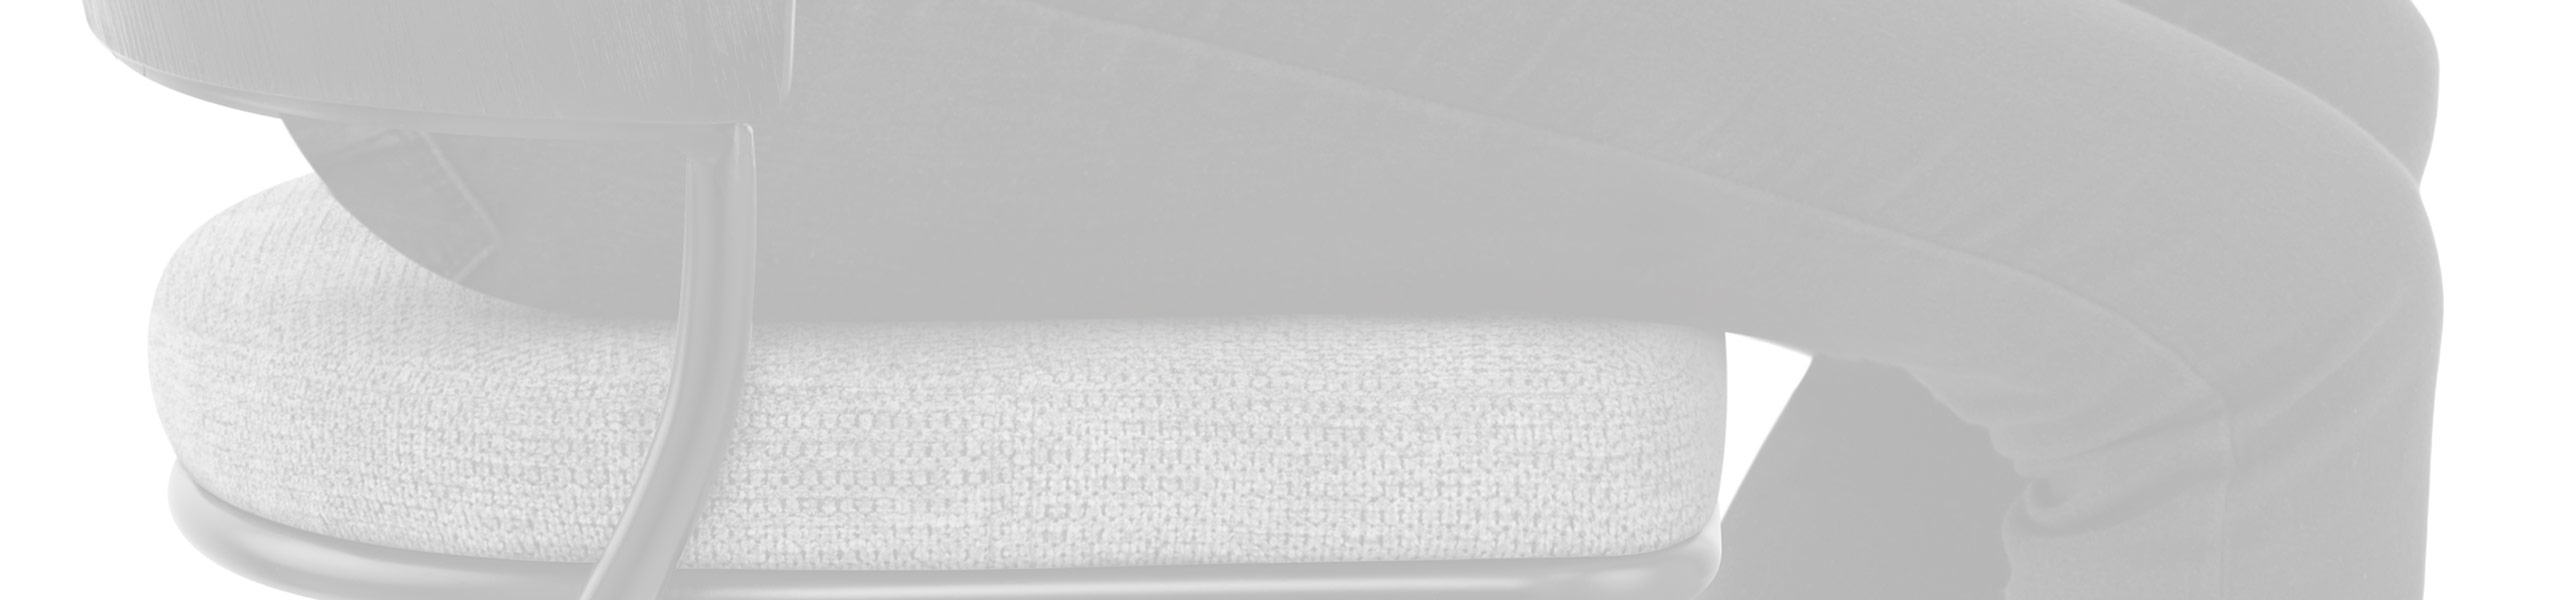 Alexa Bar Stool Grey Fabric Review Banner